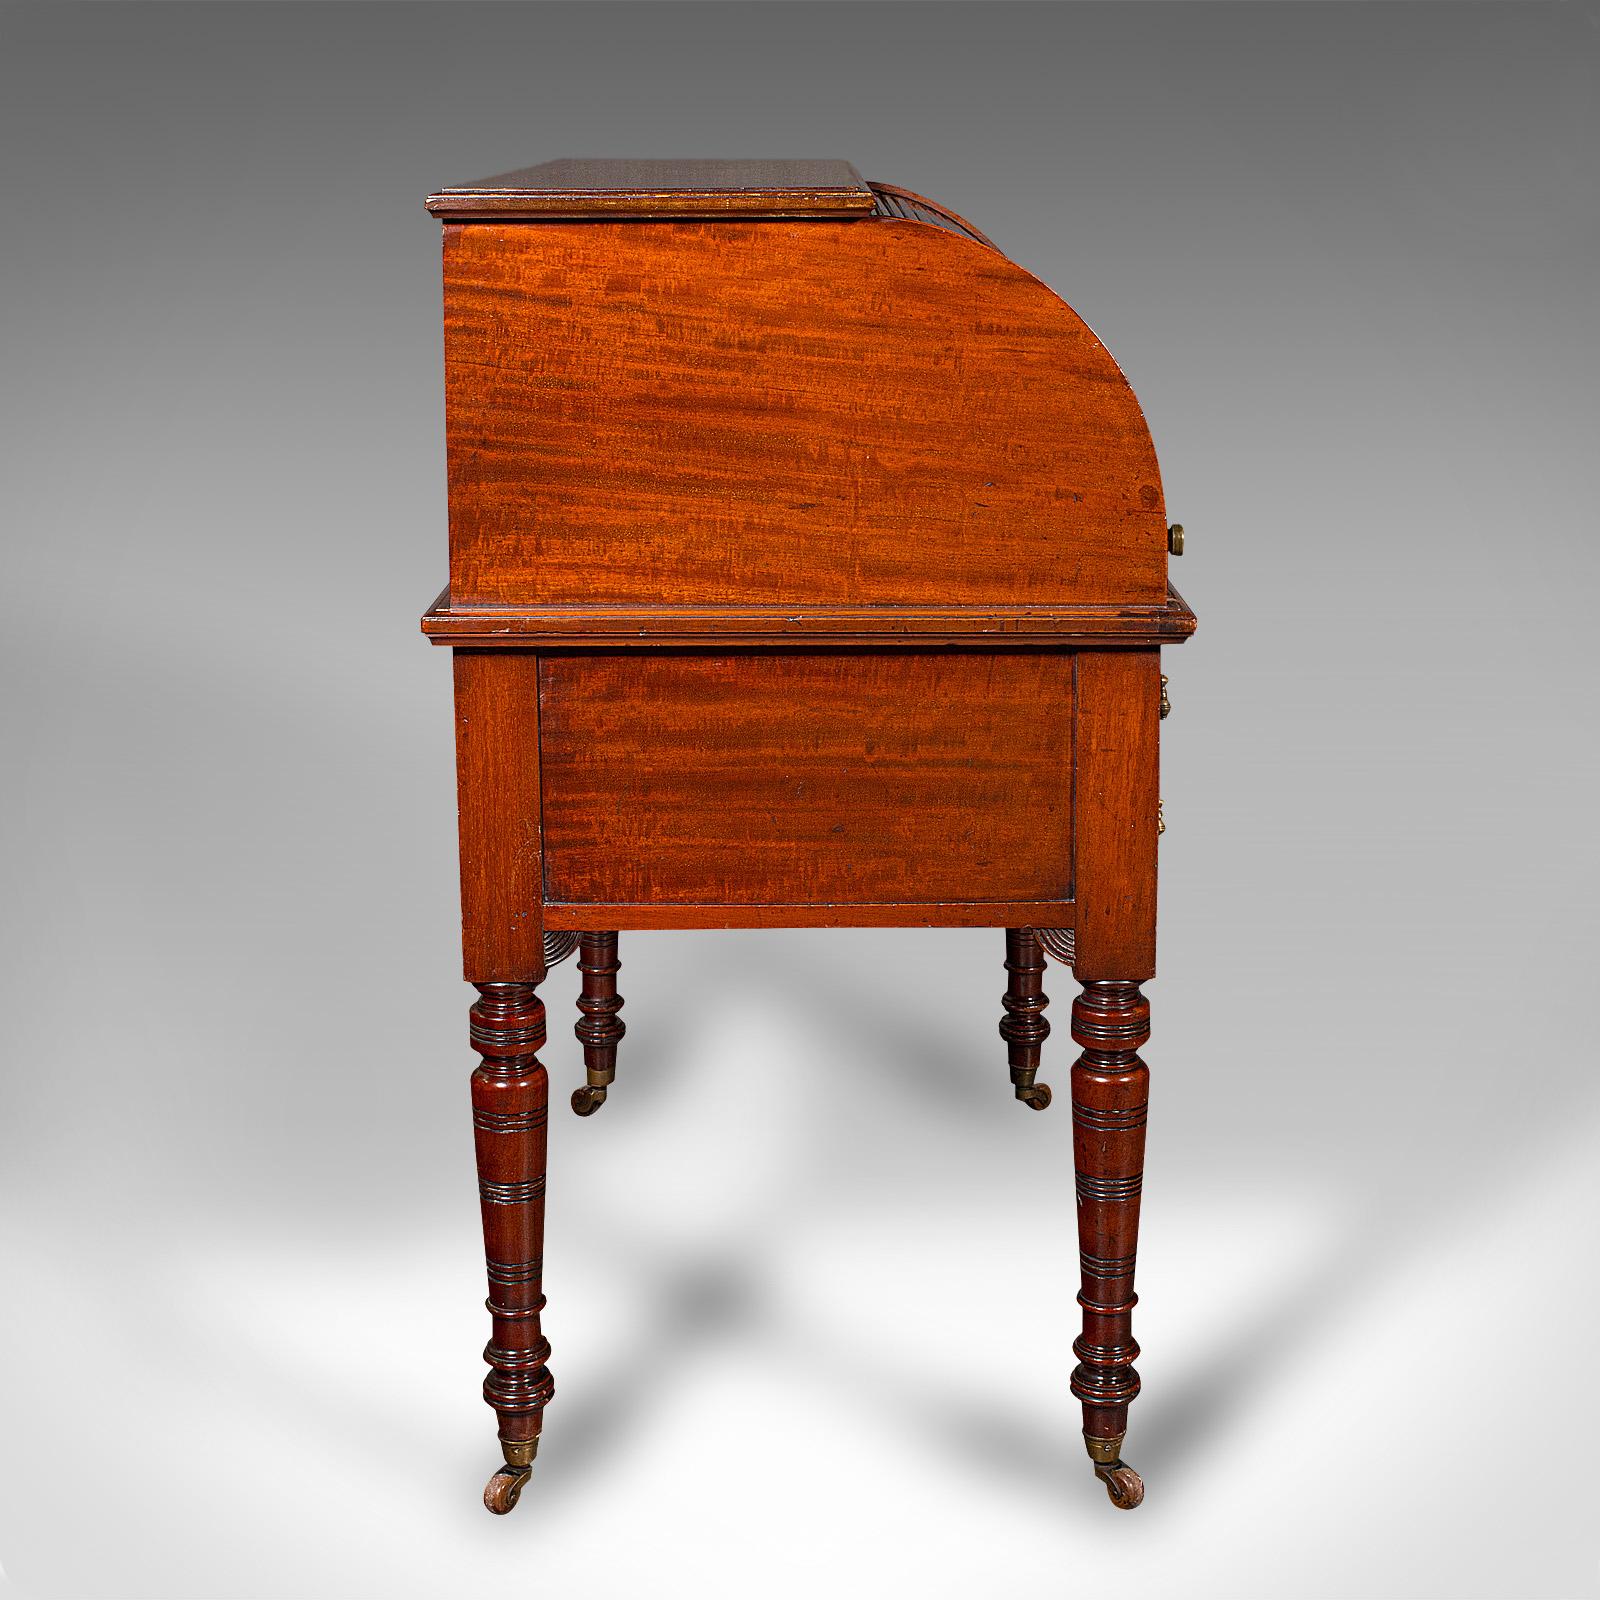 British Antique Roll-Top Desk, English, Bureau, Aesthetic Period, Victorian, Circa 1880 For Sale